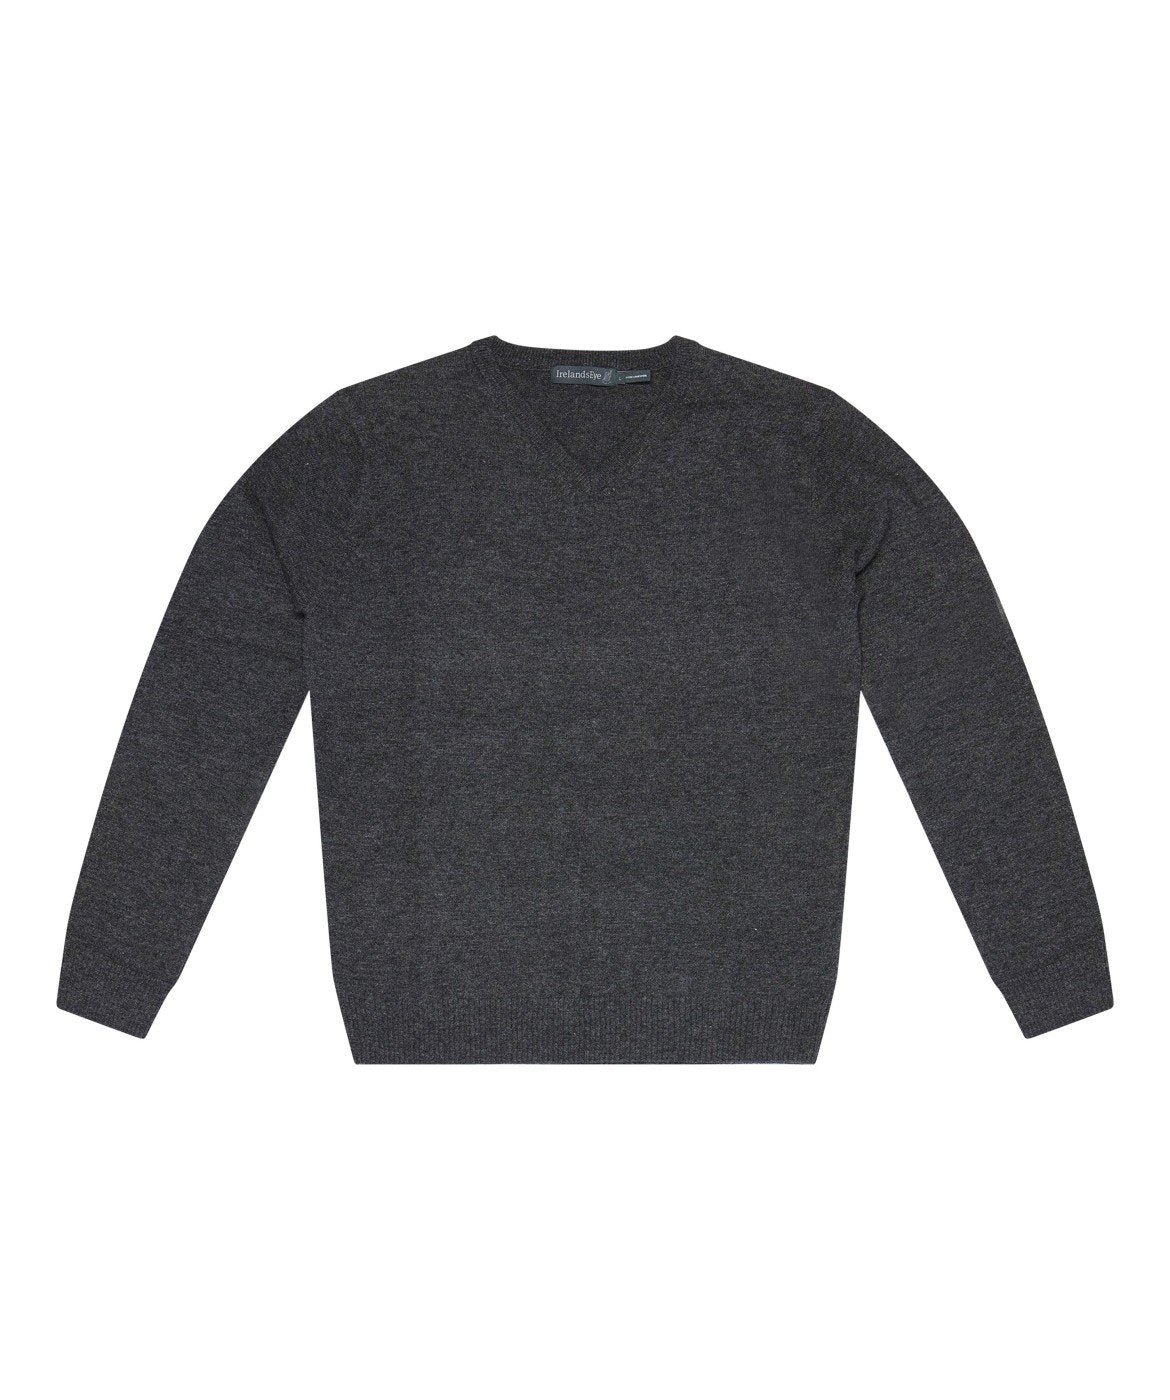 IrelandsEye Soft Touch V Neck Sweater - Charcoal